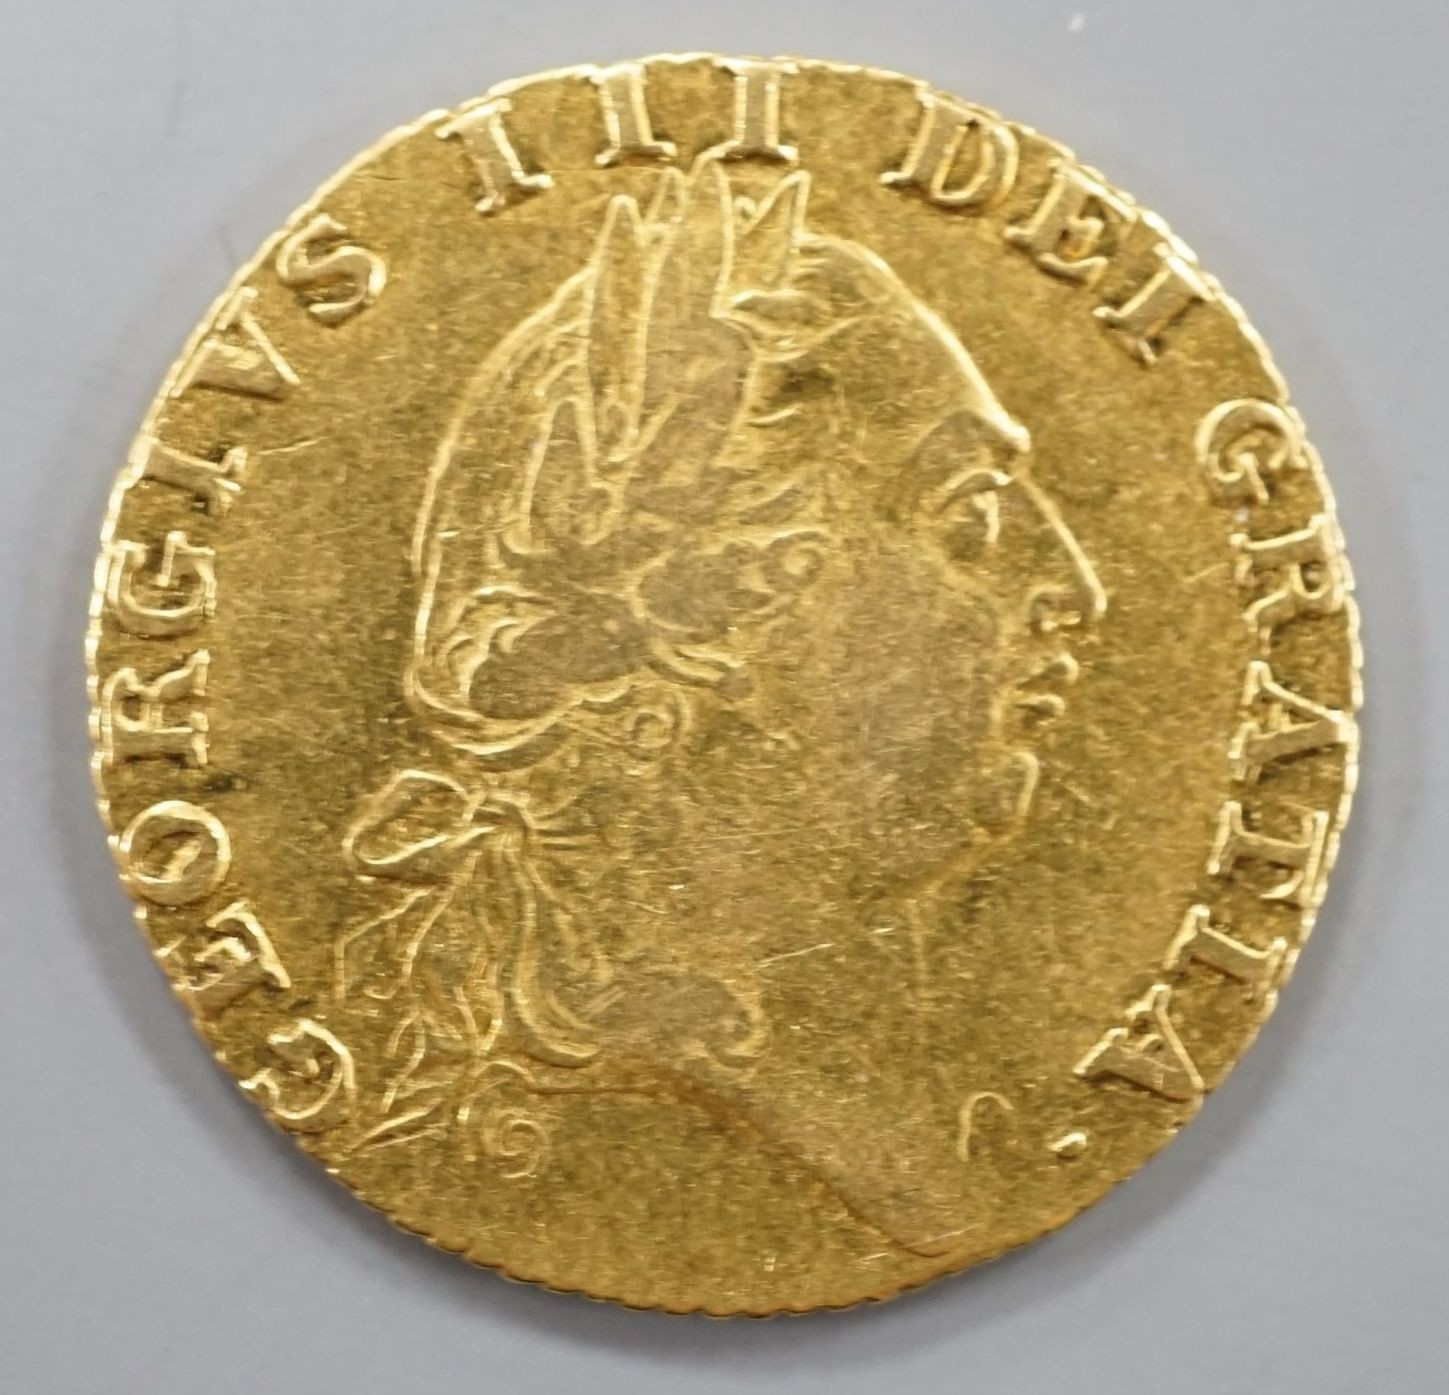 A 1787 gold spade guinea, Good F or better.